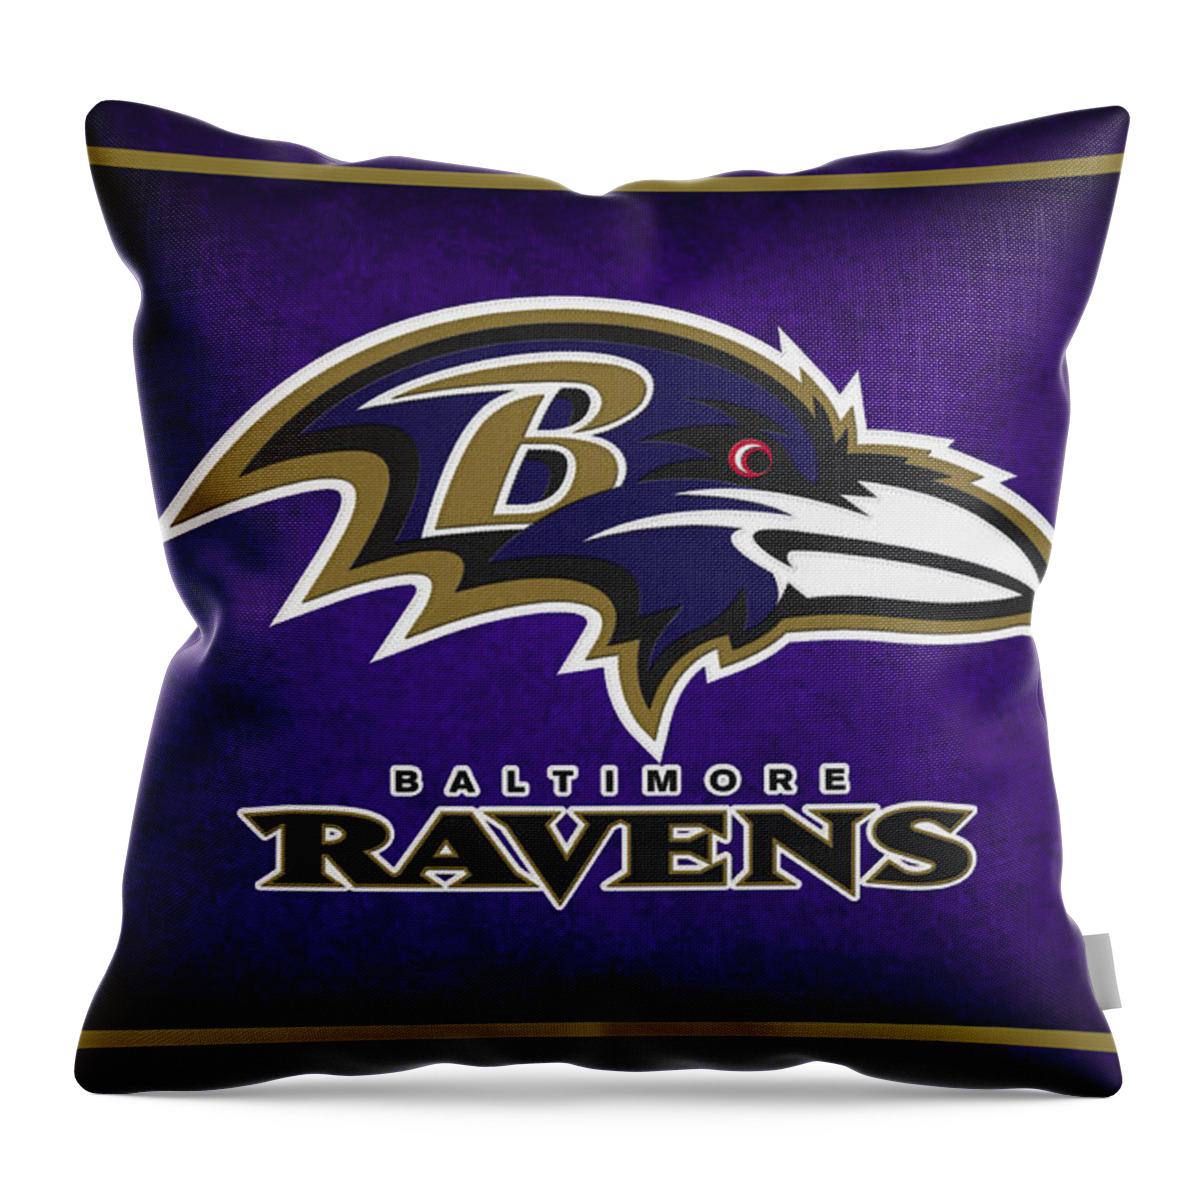 Ravens Throw Pillow featuring the photograph Baltimore Ravens by Joe Hamilton